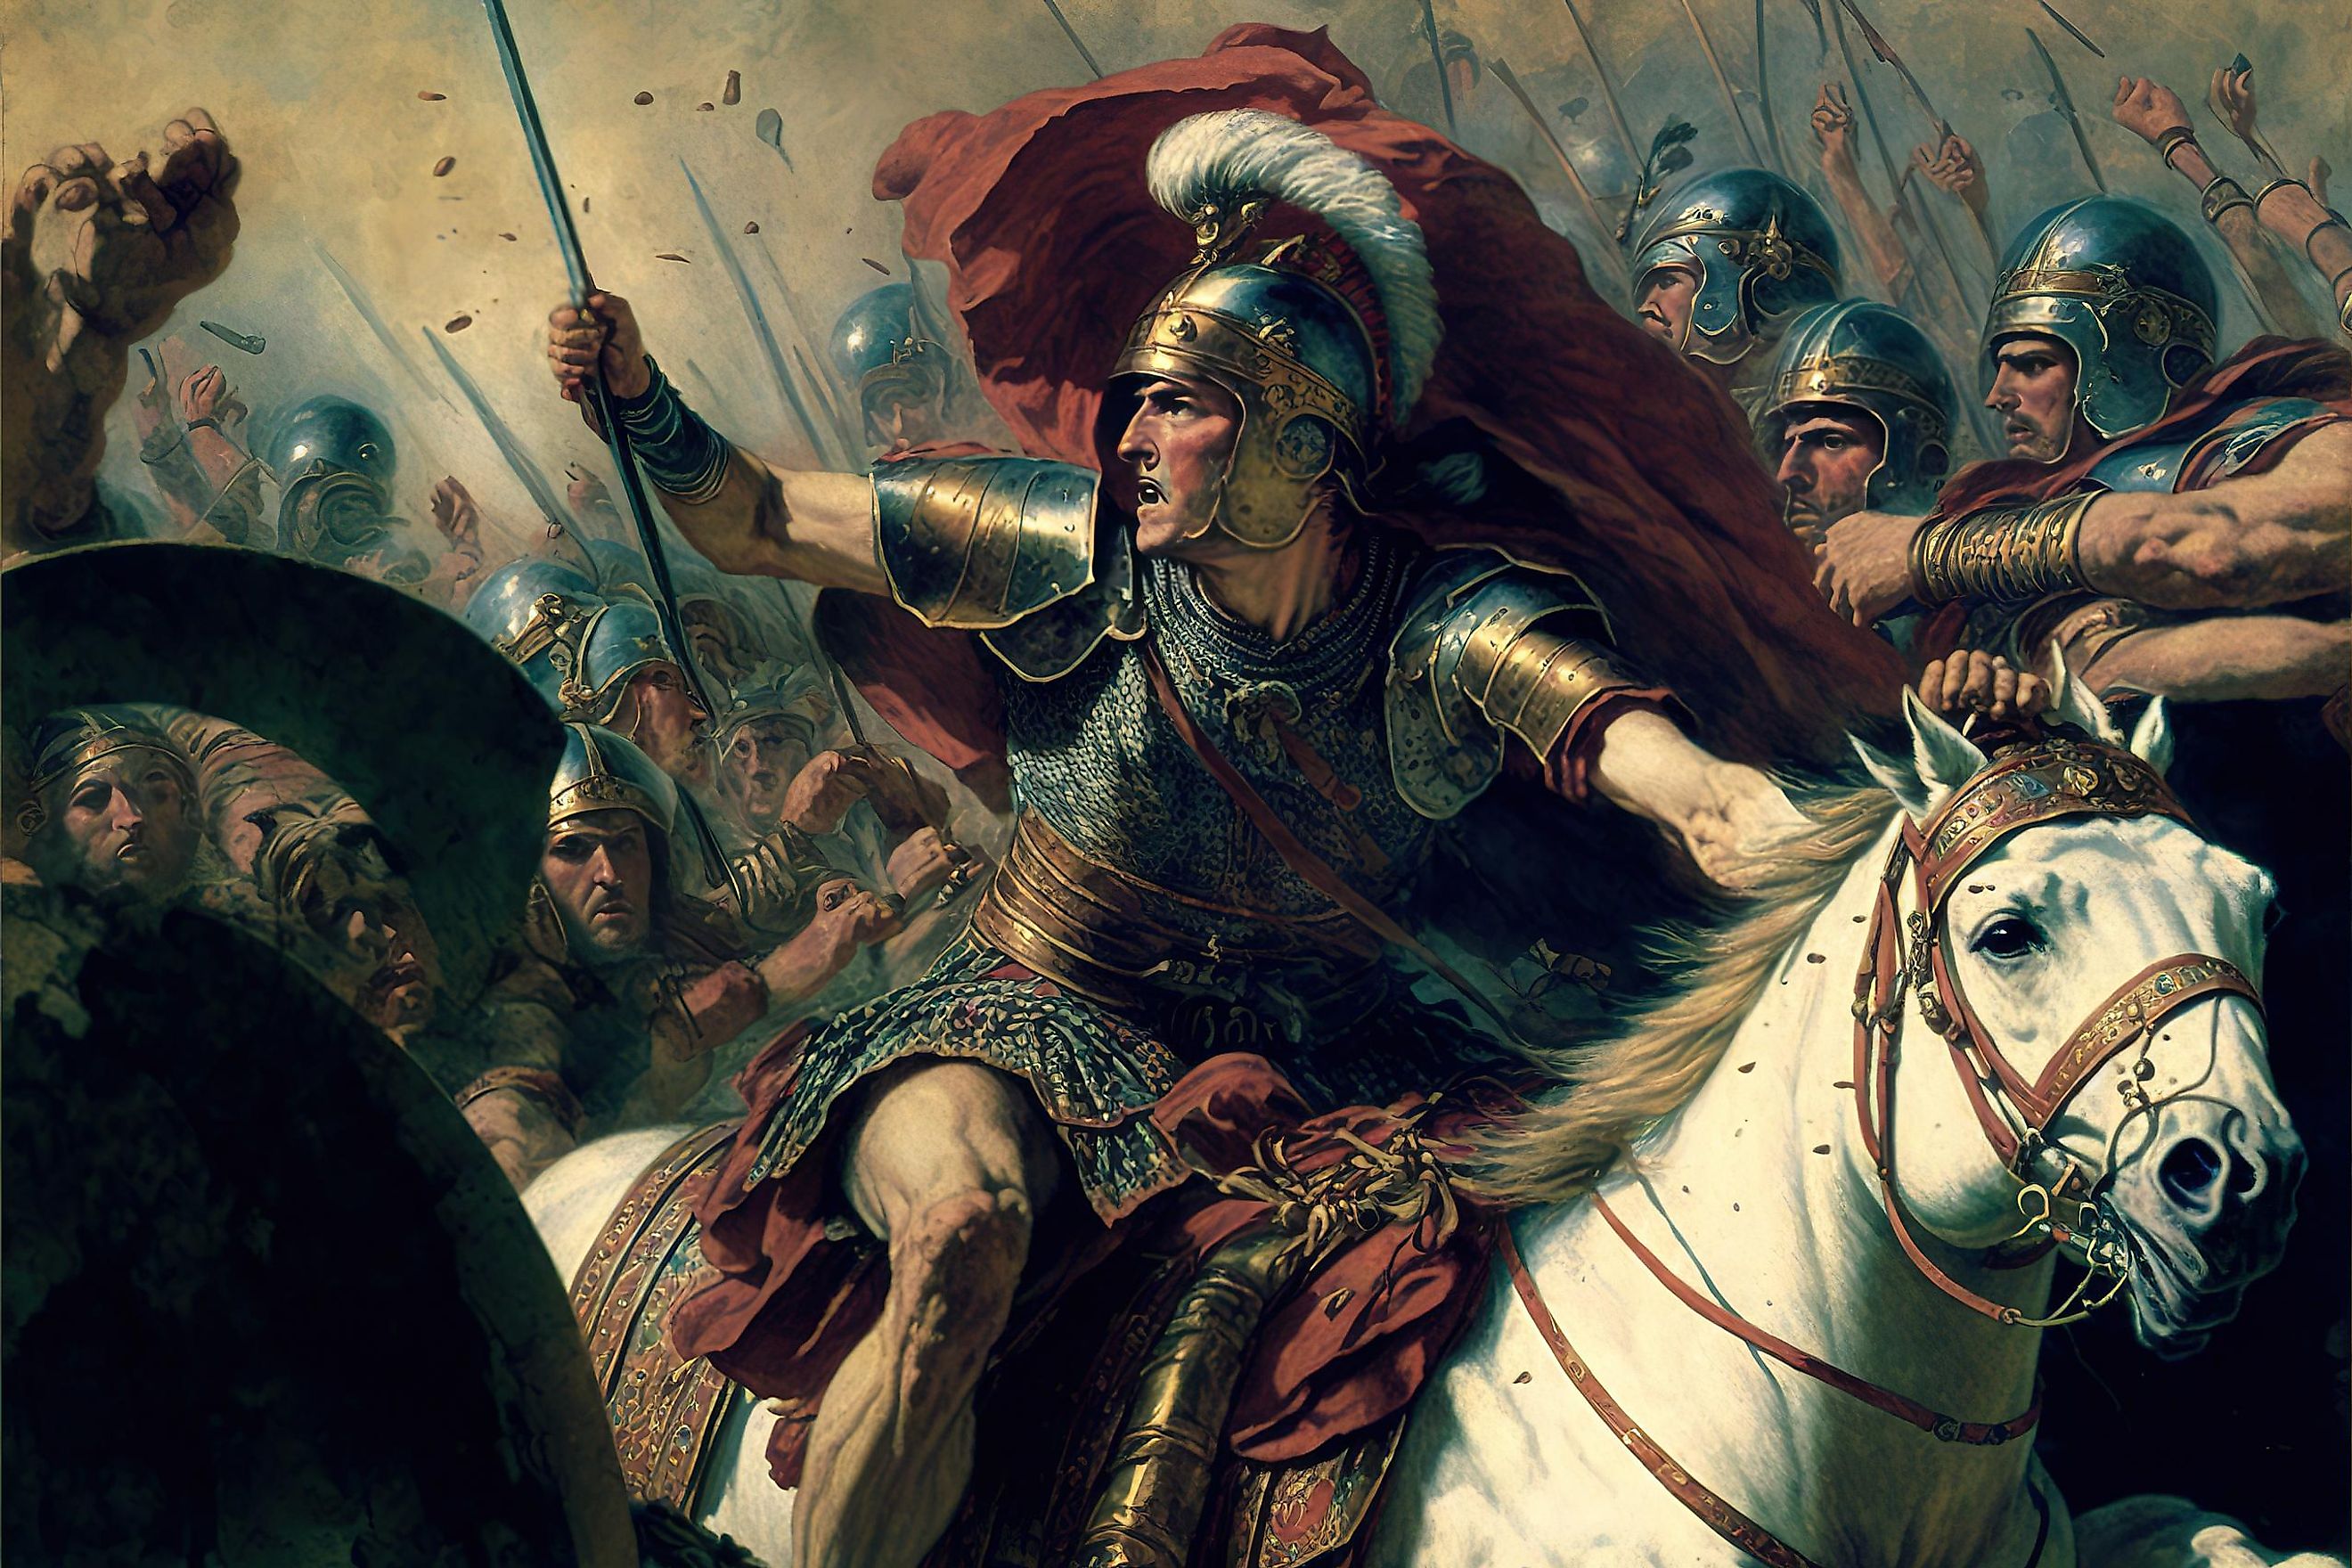 Illustration of Alexander the Great riding horseback, wielding a sword mid-battle. 